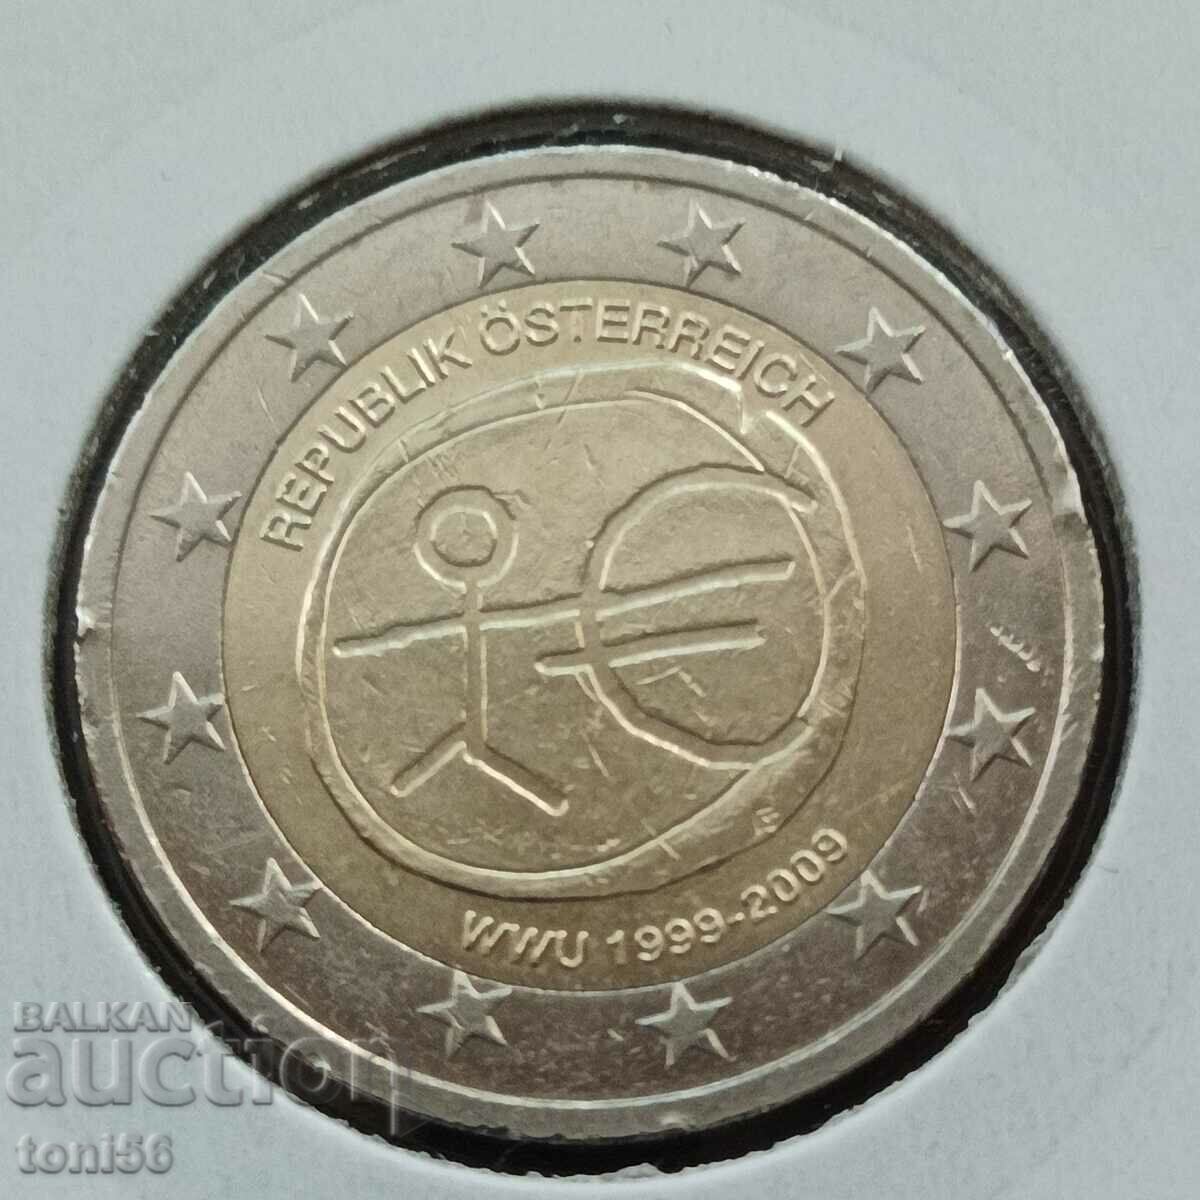 Austria 2 euro 2009 - 10 ani „Uniunea Economică”